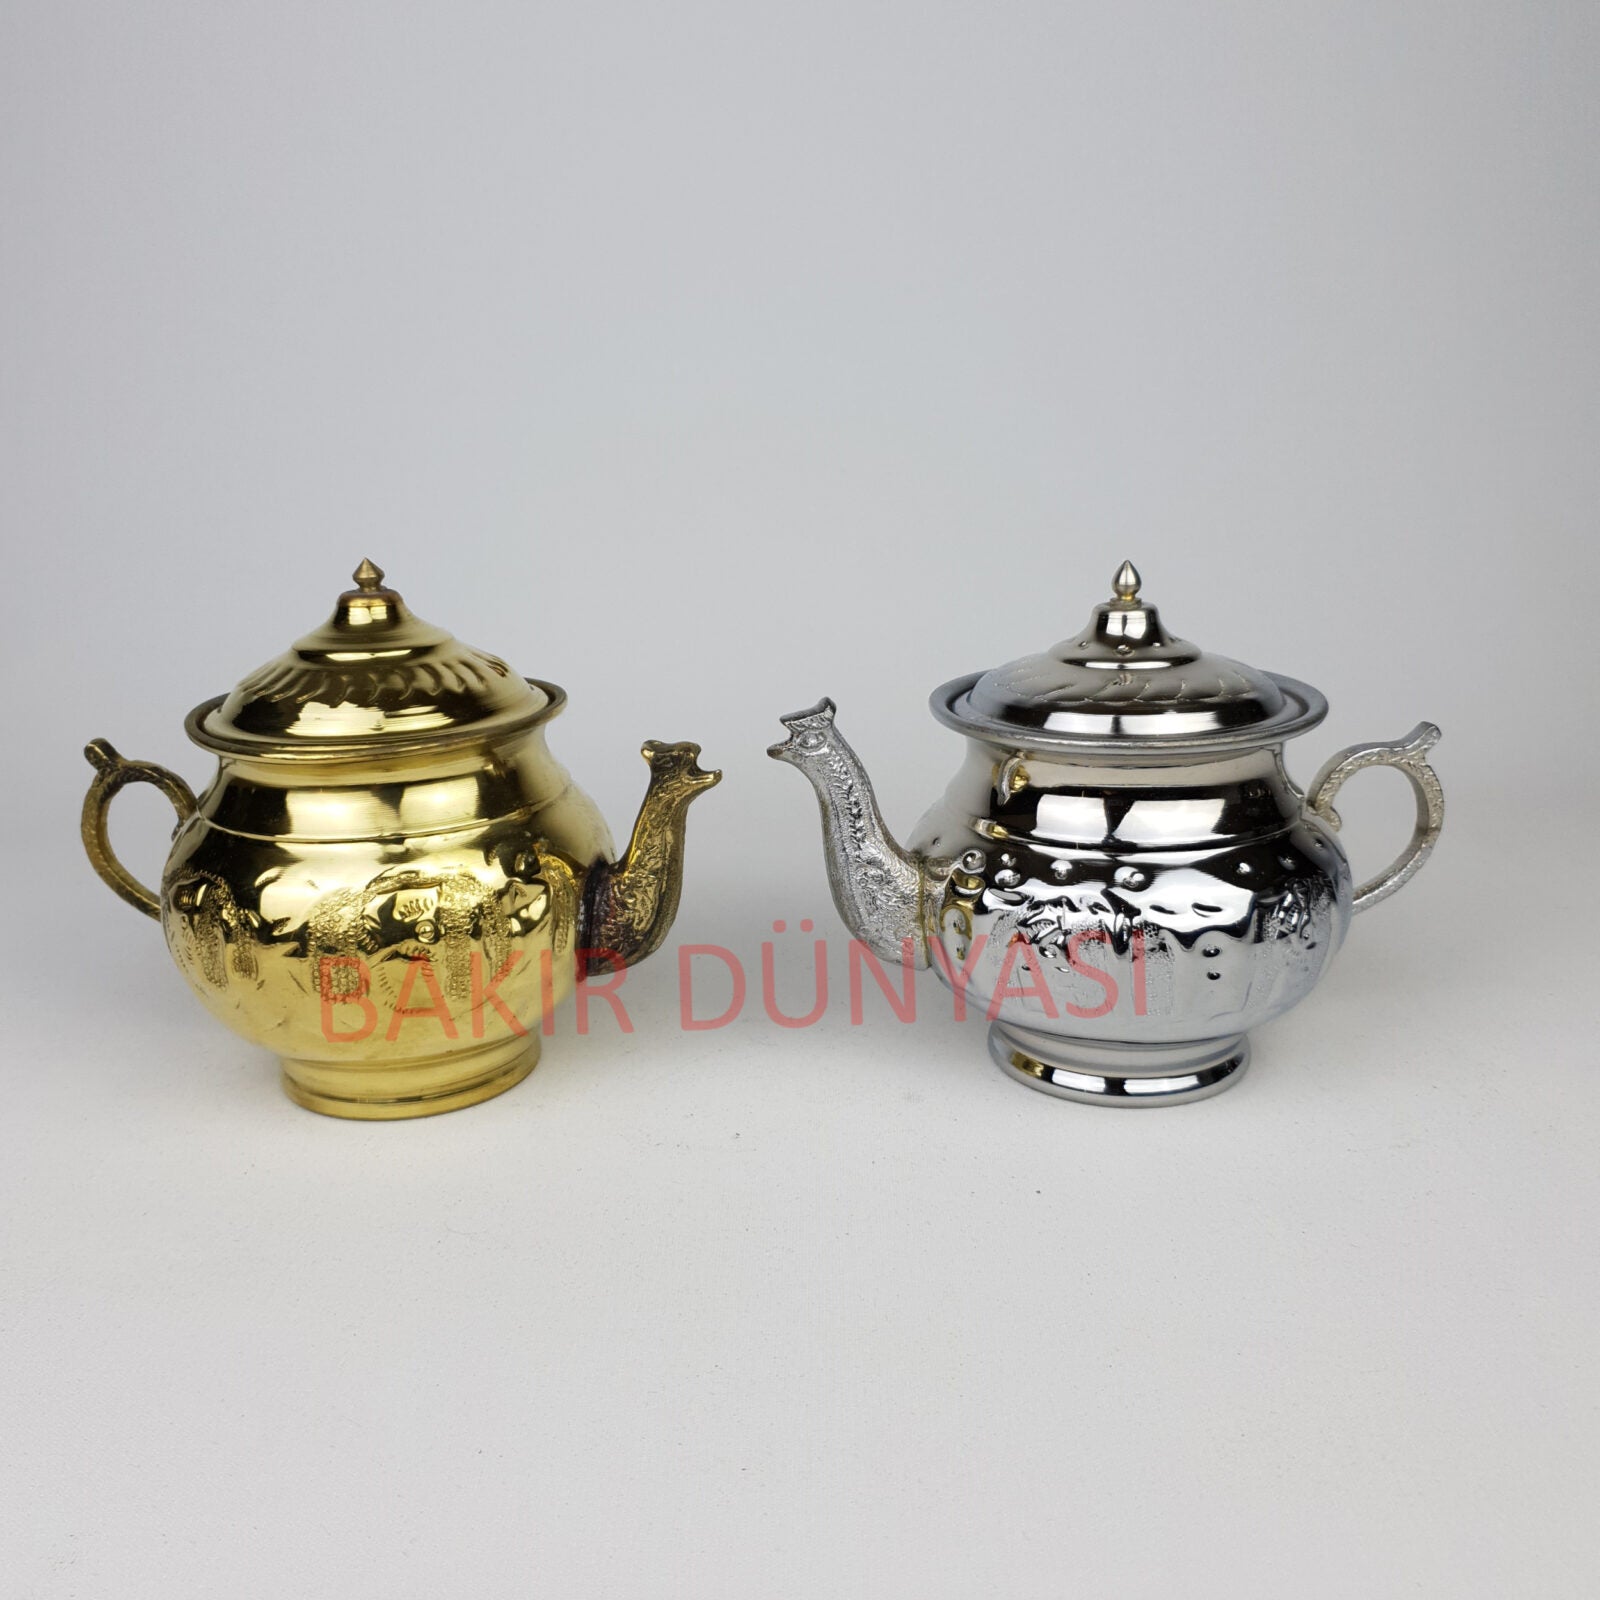 Print Small Brass Teapot